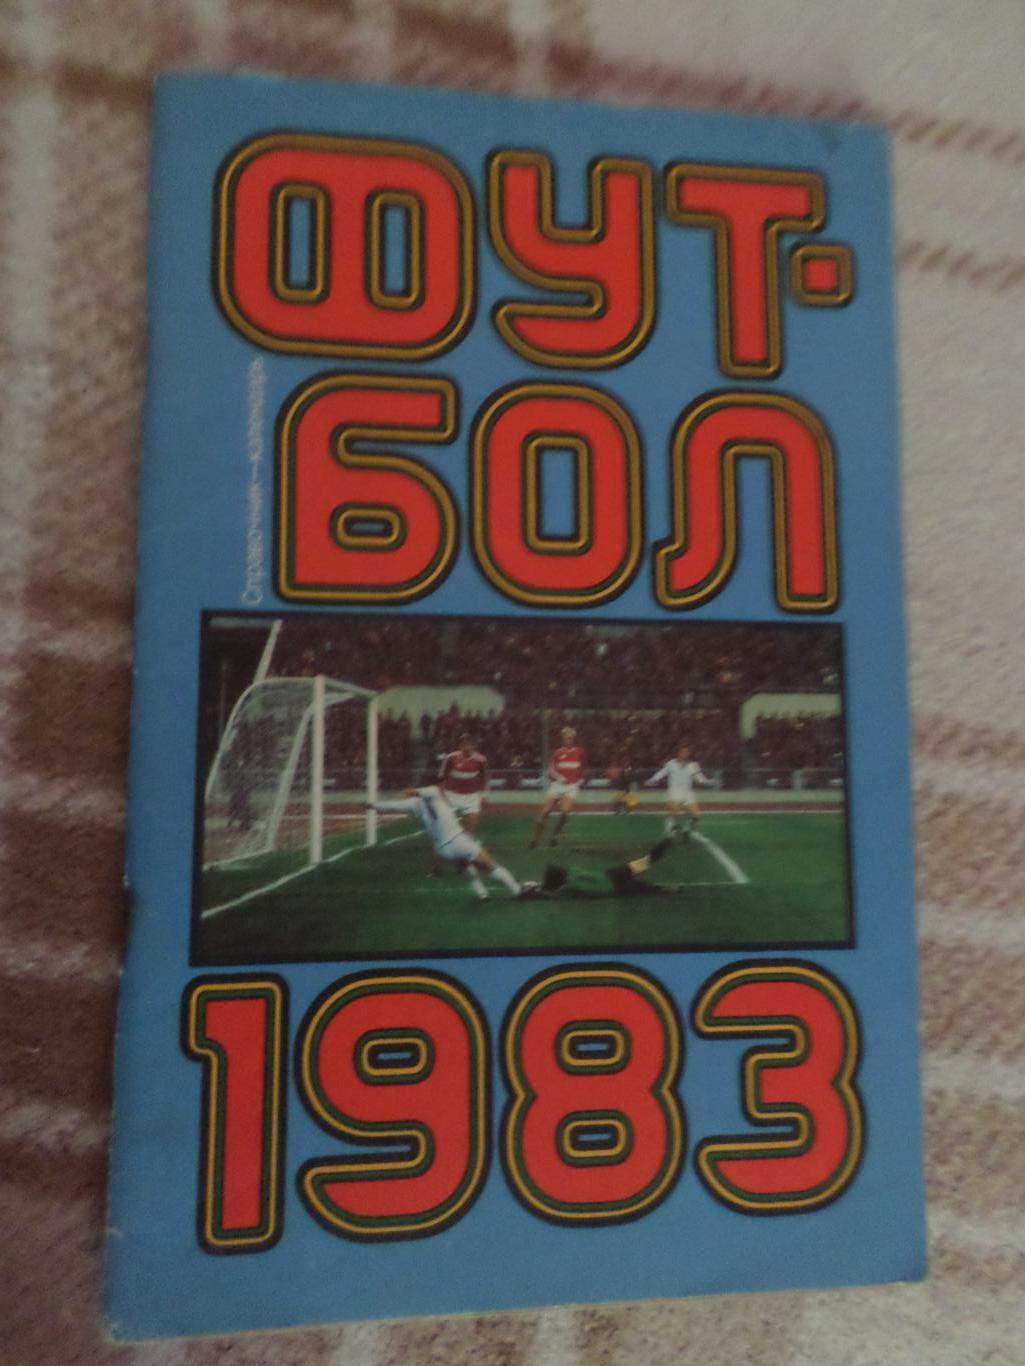 справочник Футбол 1983 г. Москва Лужники